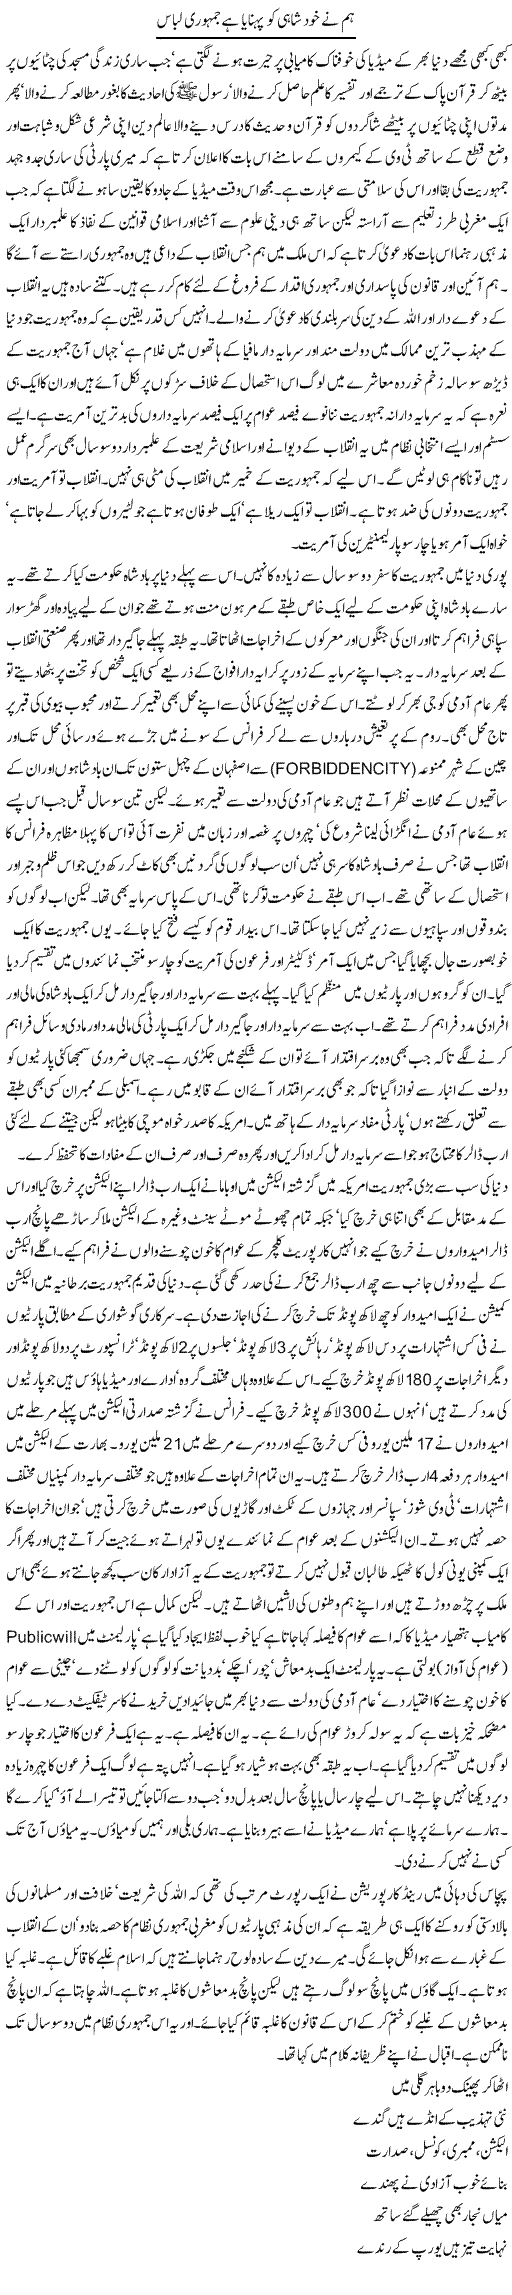 Islam and Democracy Express Column Orya Maqbool 10 December 2011